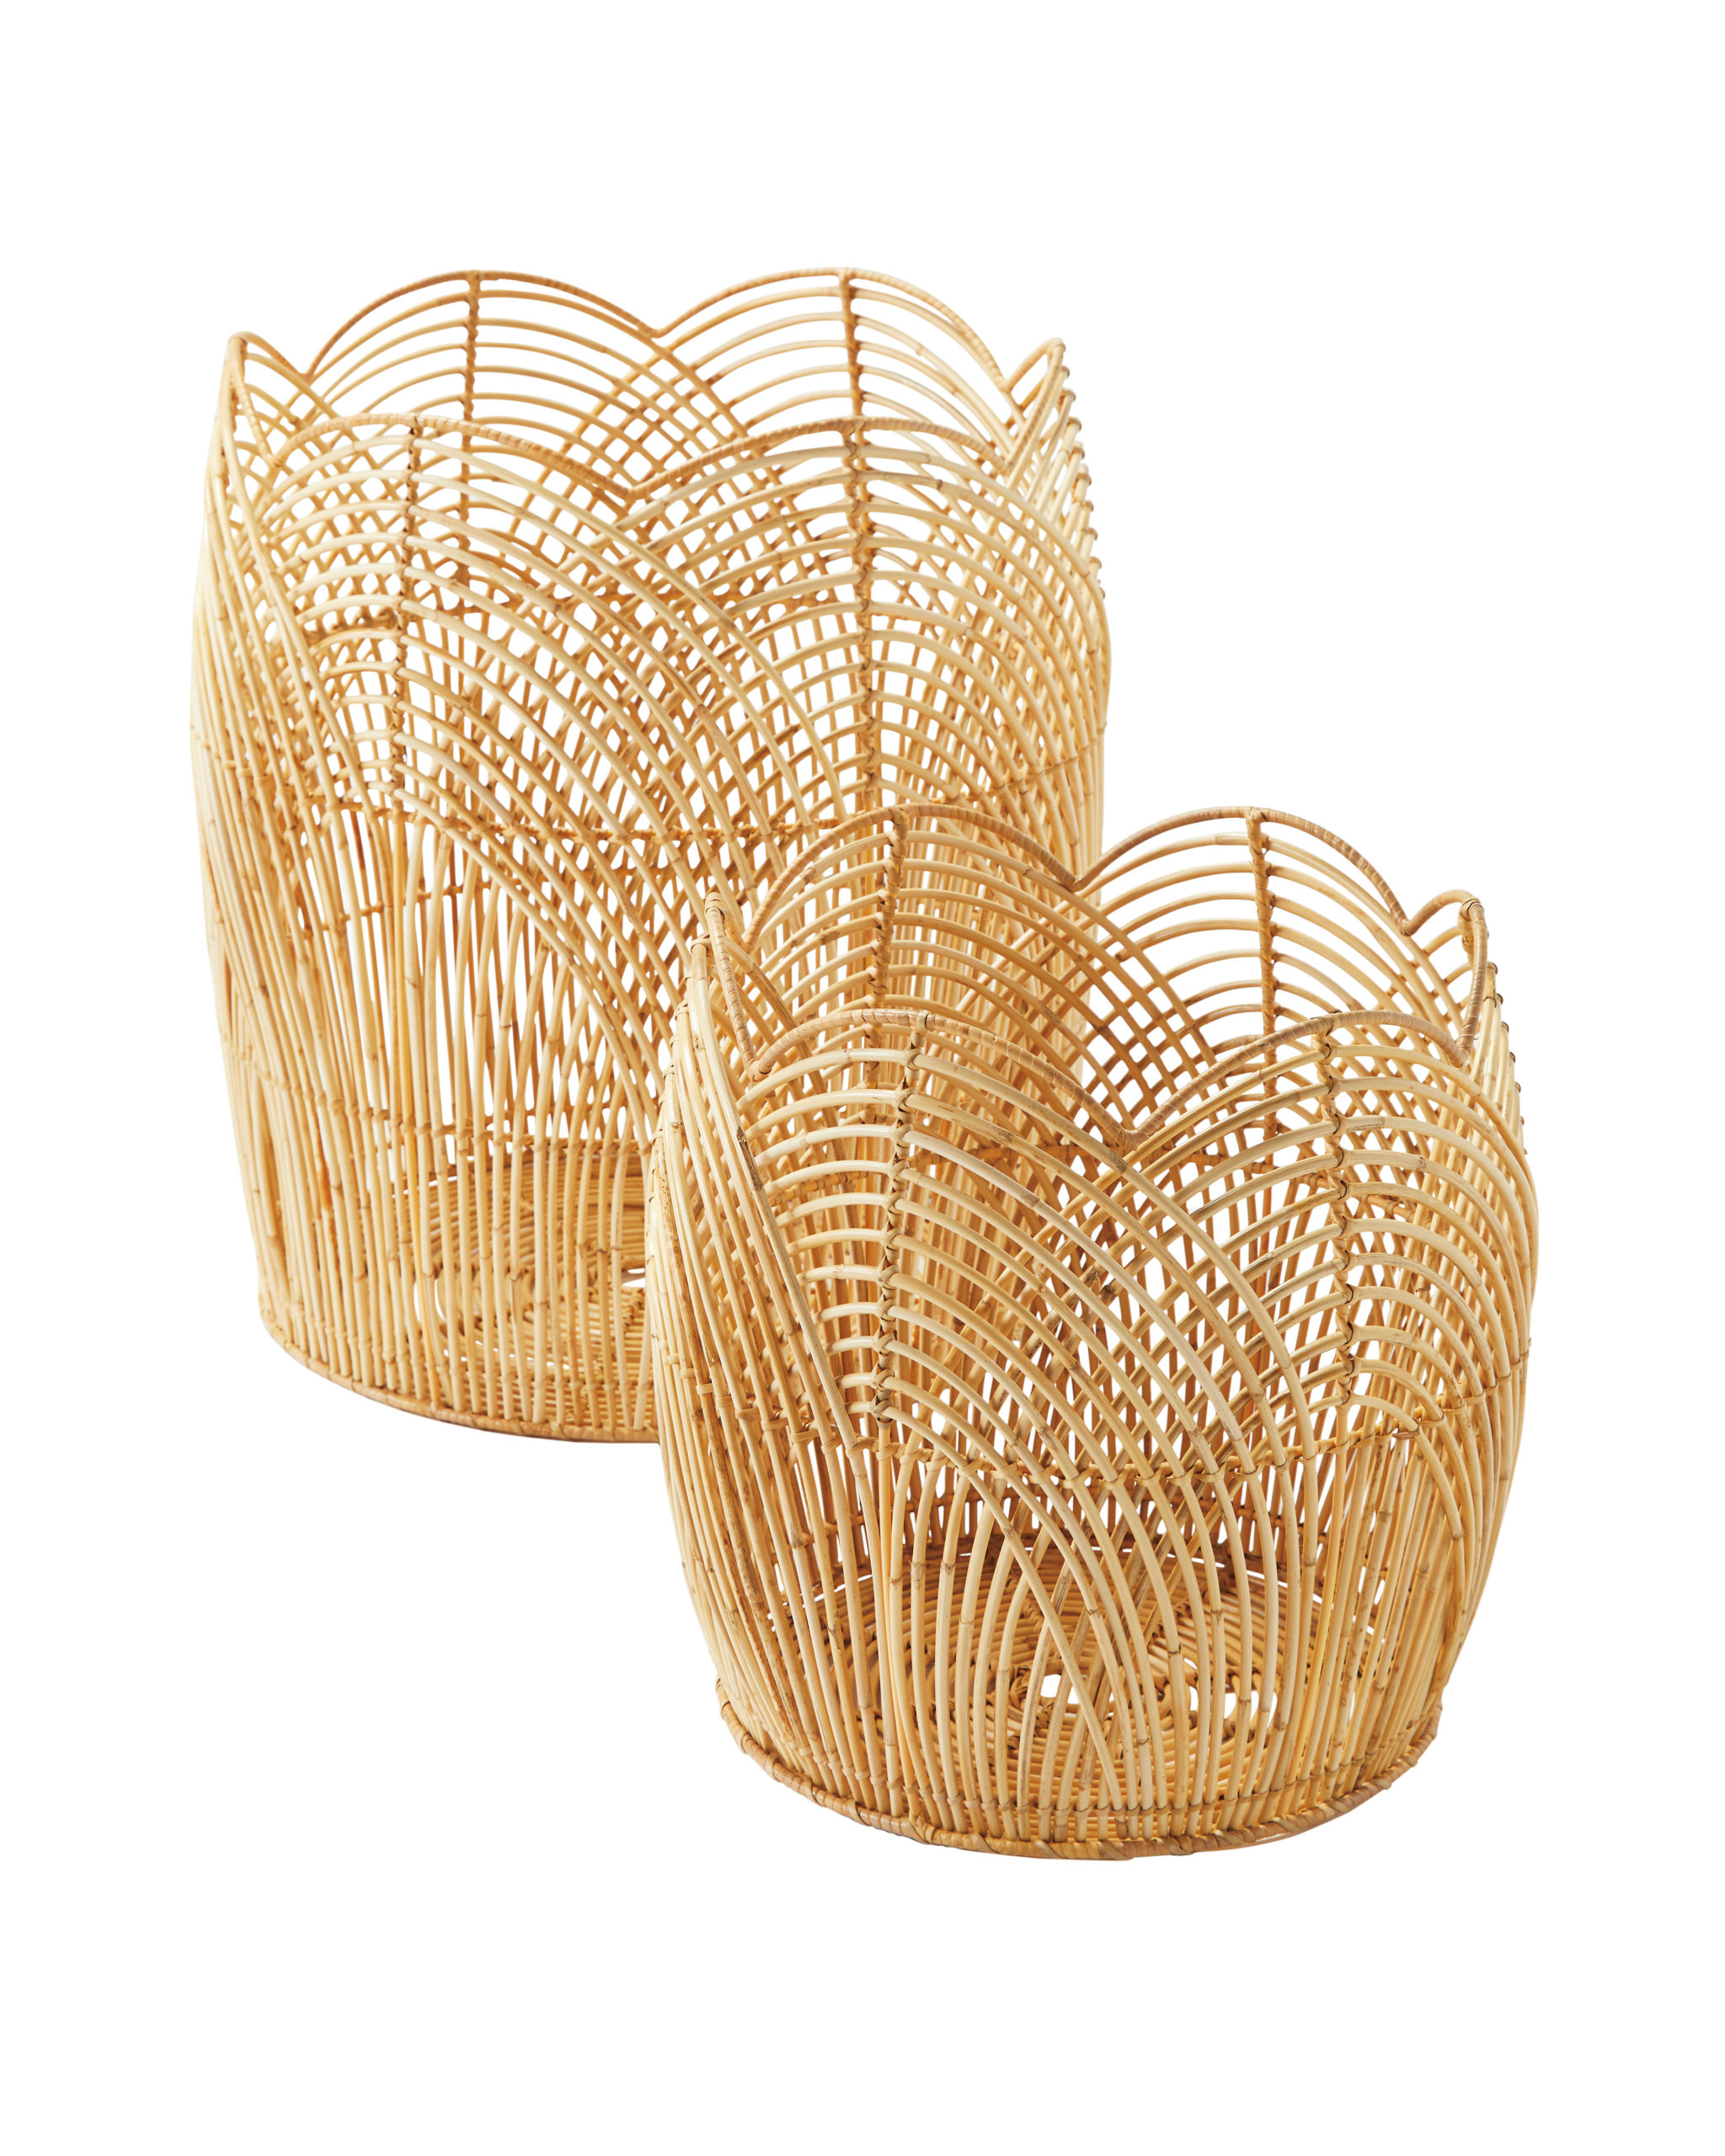 Summerwood Baskets